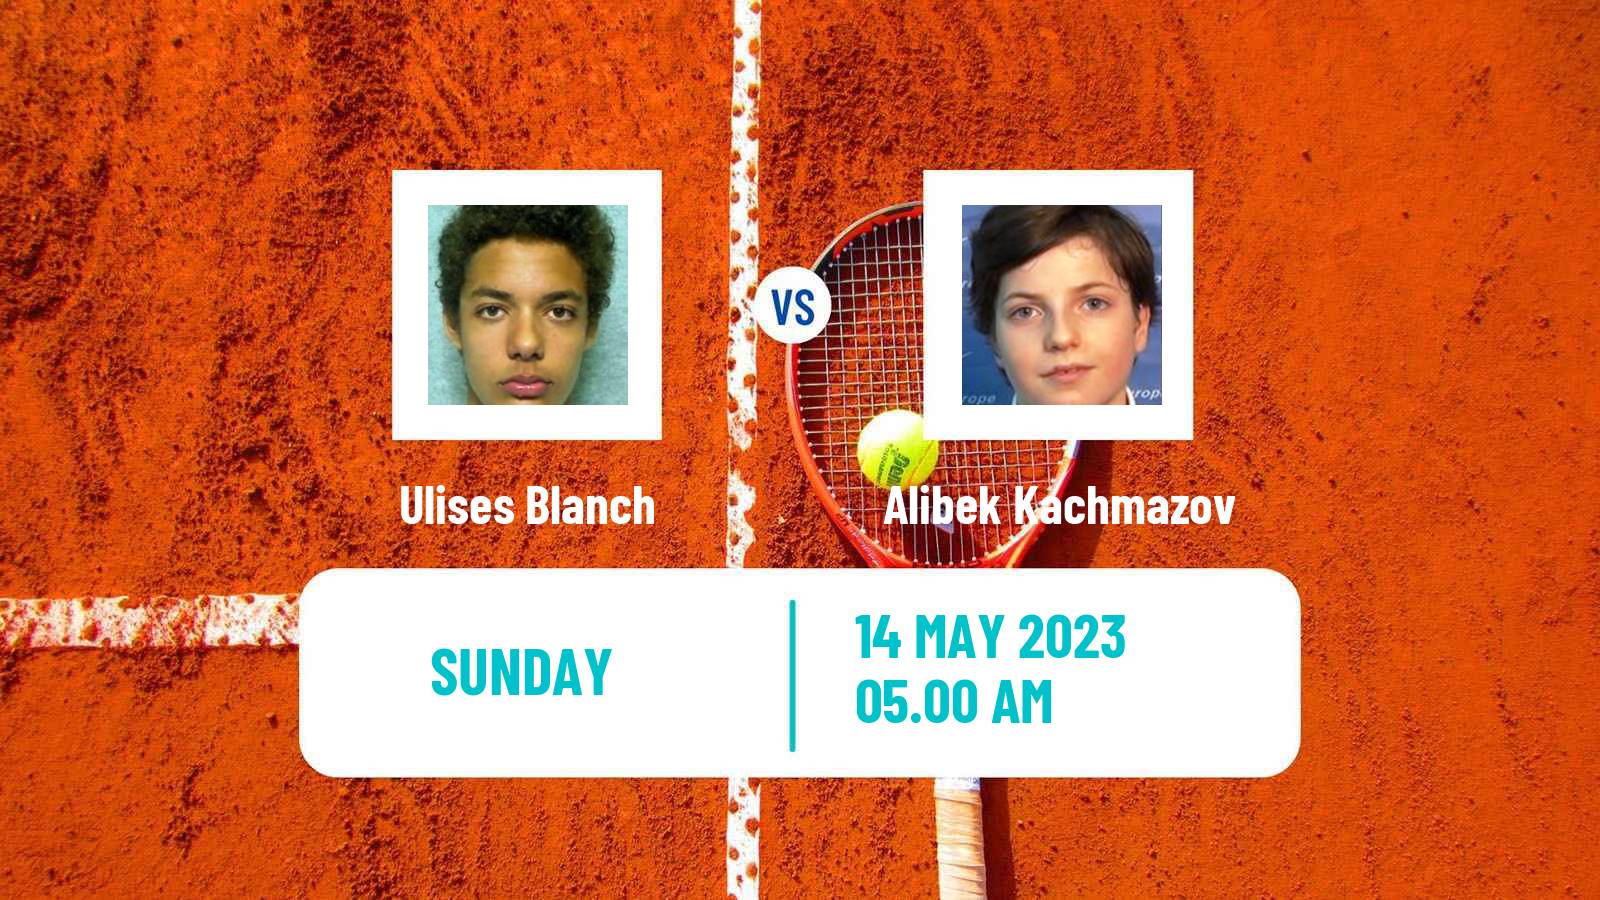 Tennis ATP Challenger Ulises Blanch - Alibek Kachmazov